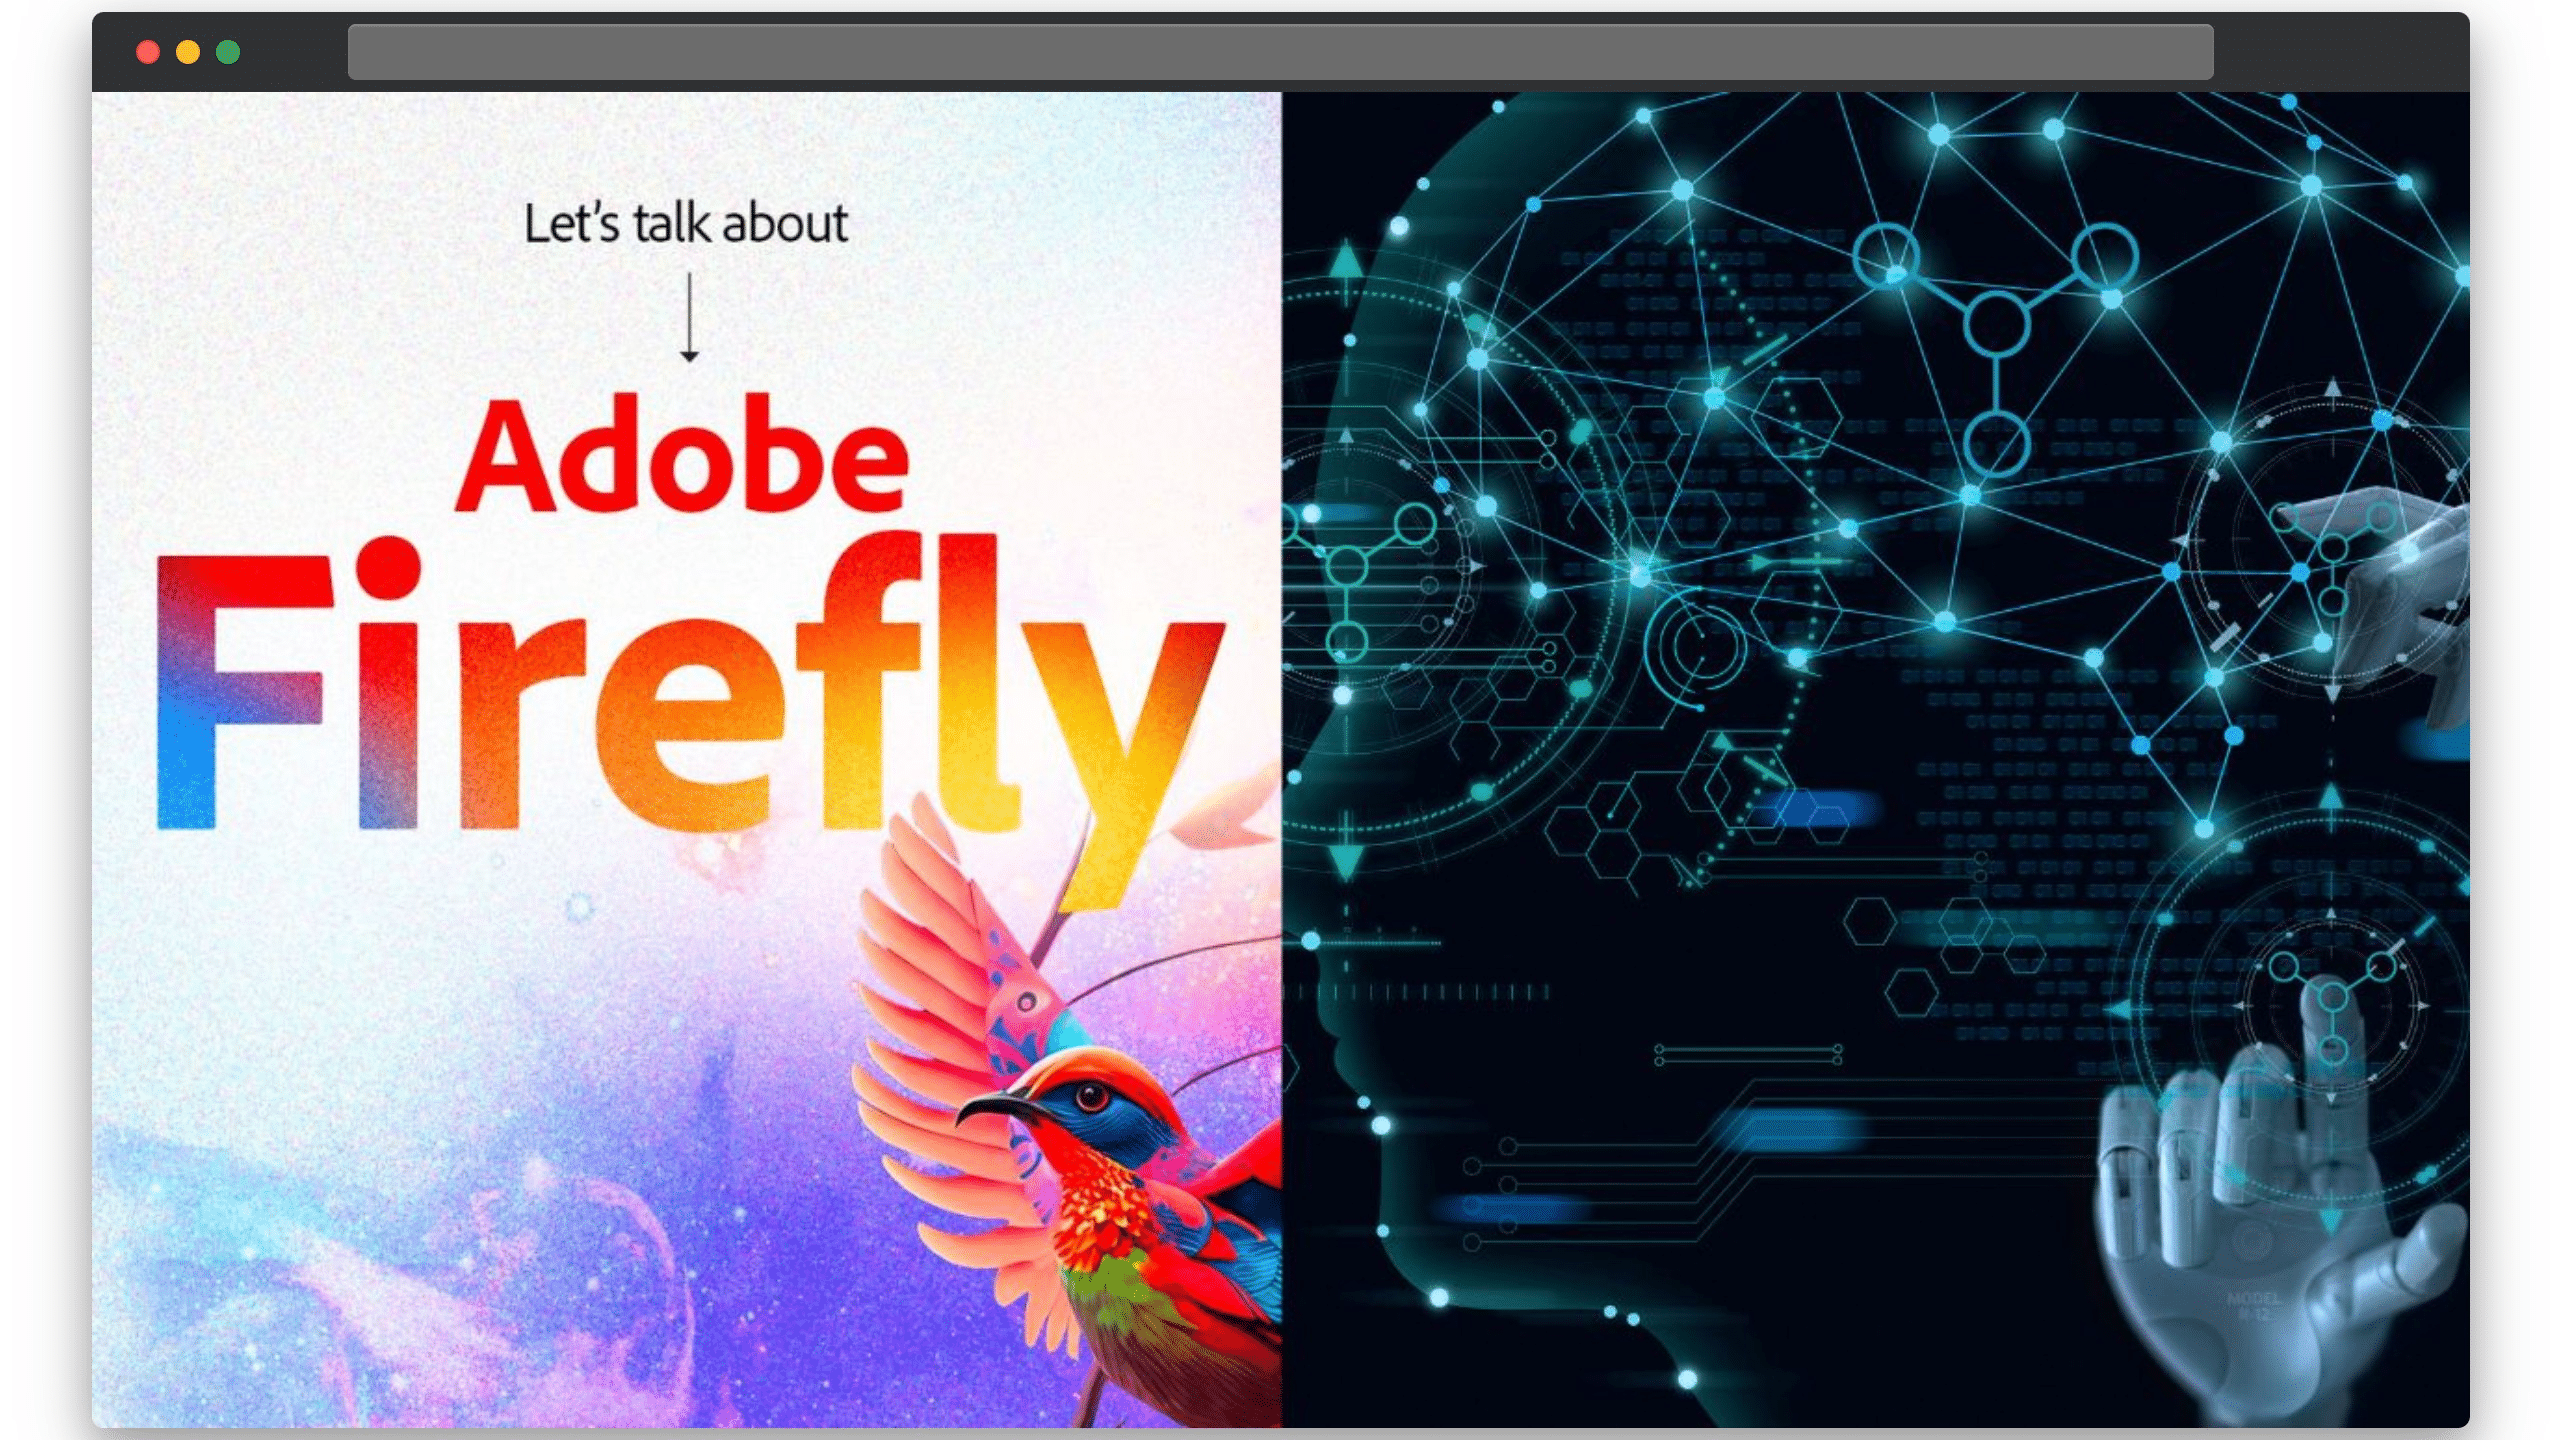 The Adobe Firefly logo 